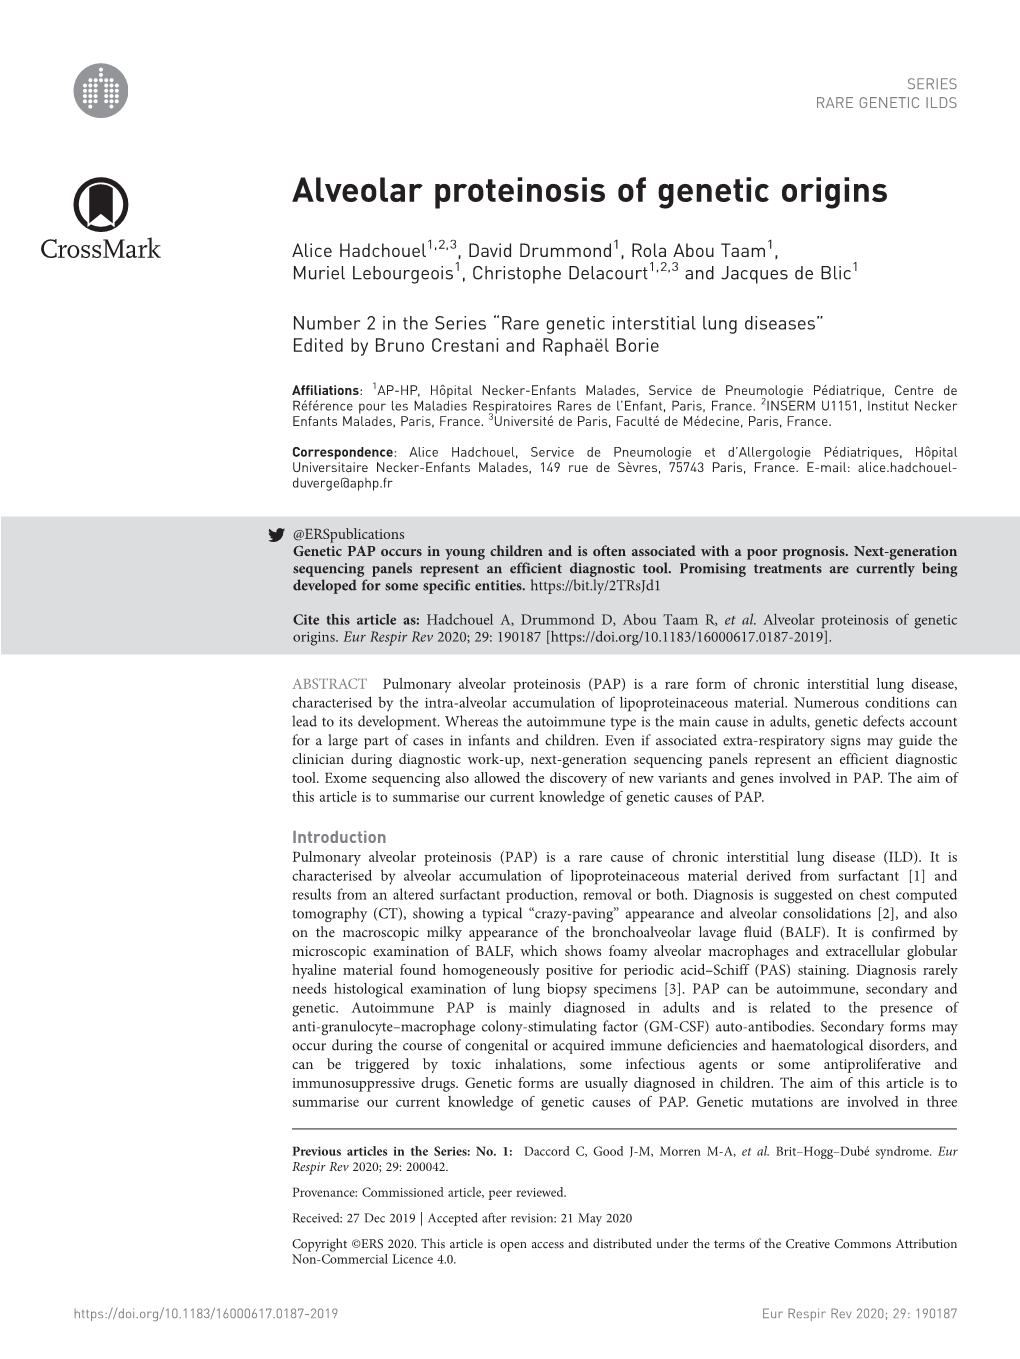 Alveolar Proteinosis of Genetic Origins